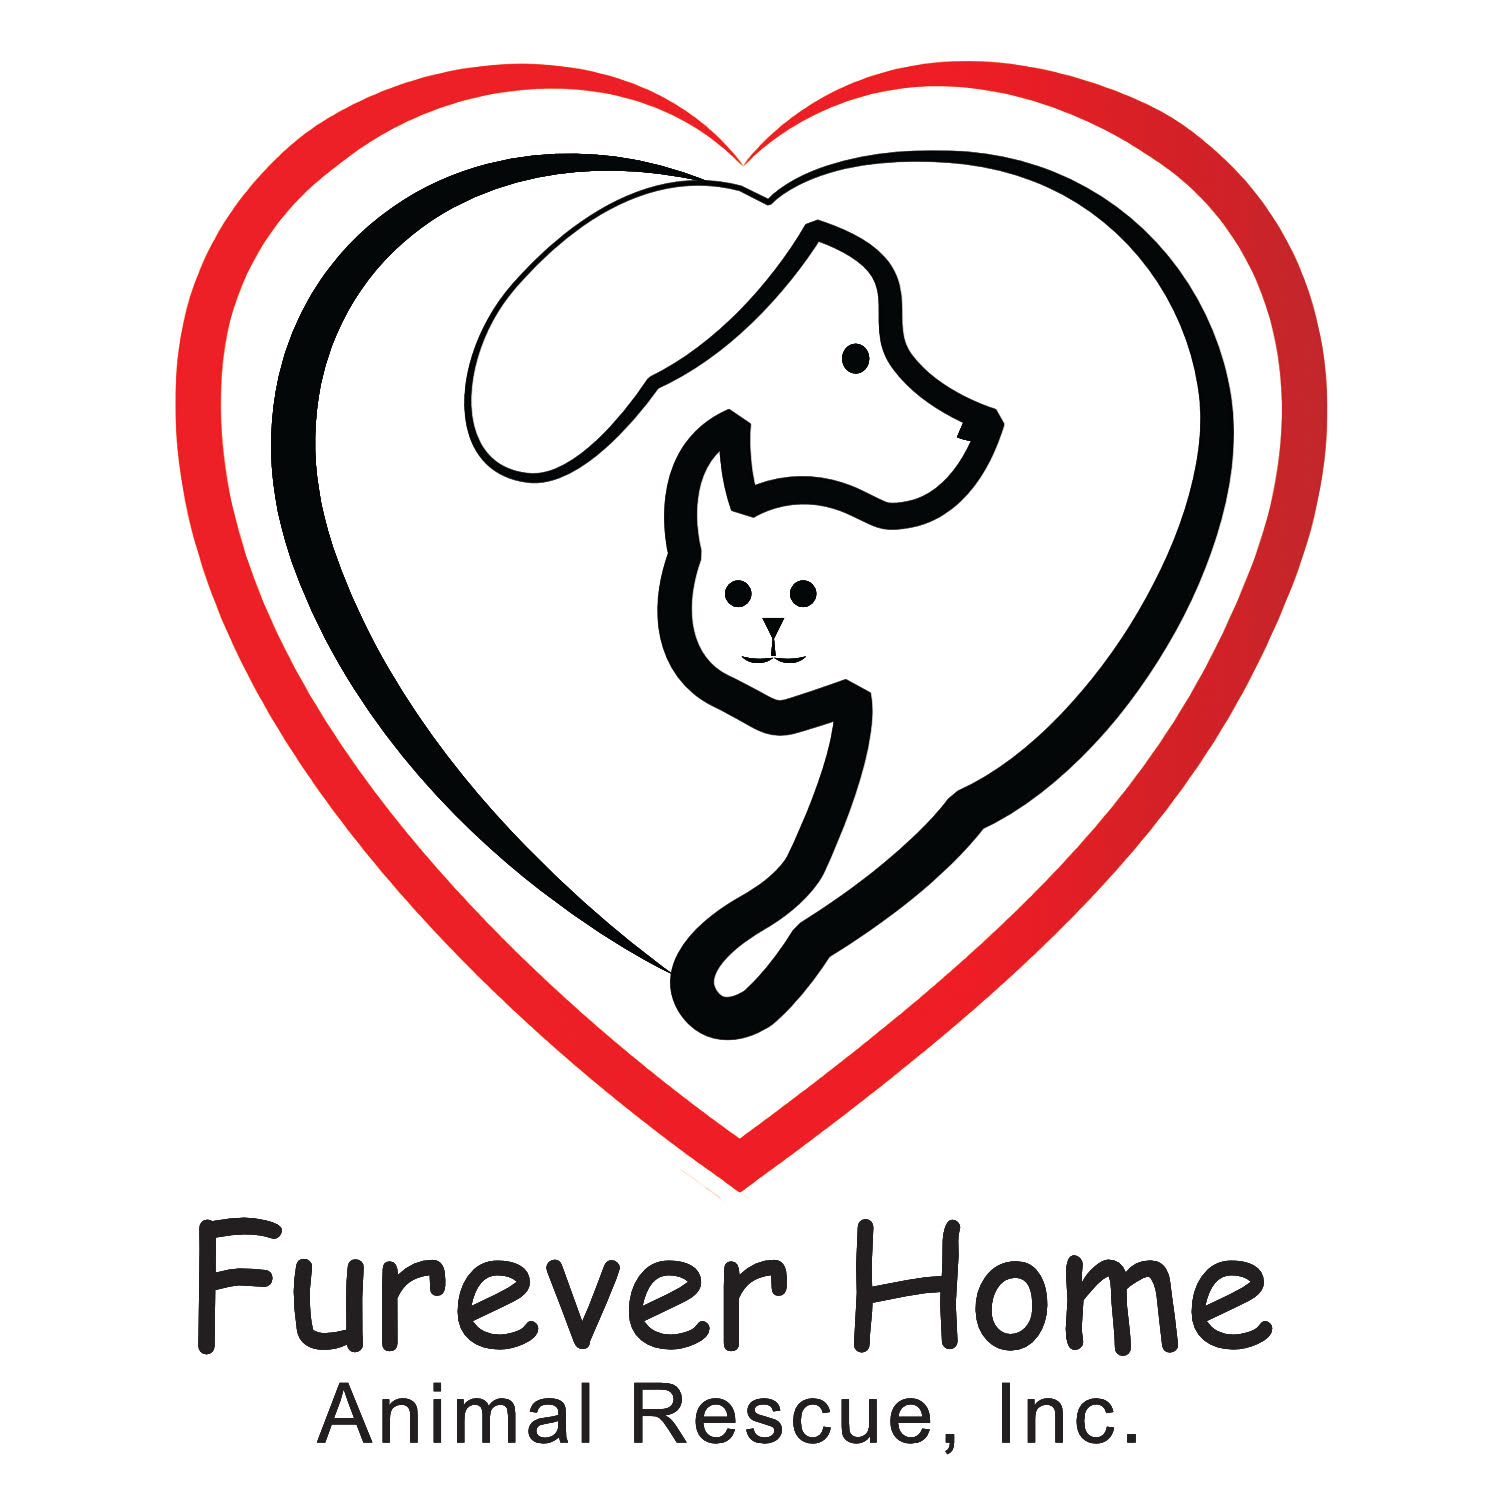 Furever Home Animal Rescue